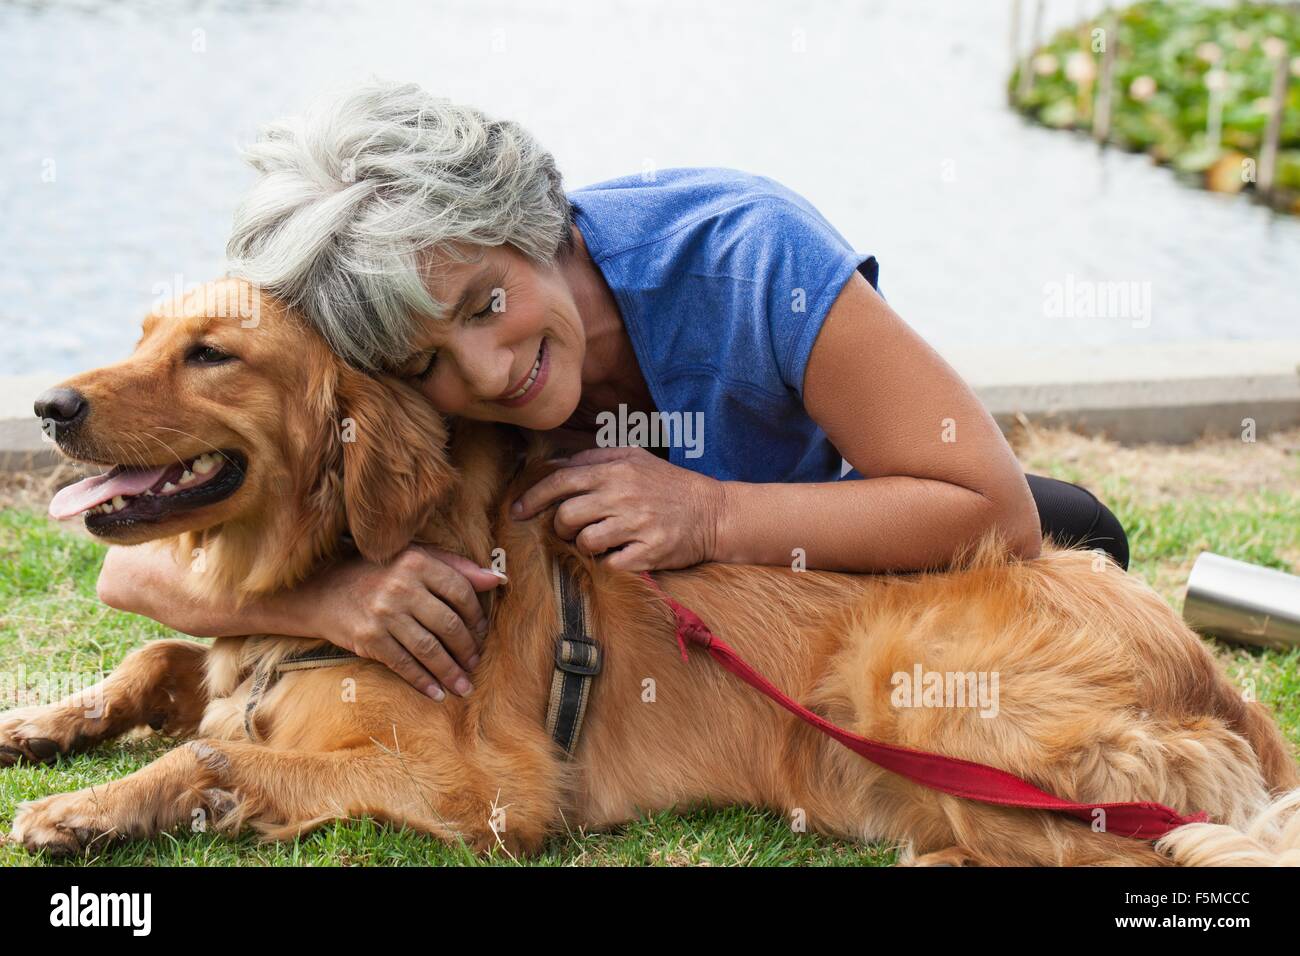 Mature woman hugging dog, outdoors Stock Photo